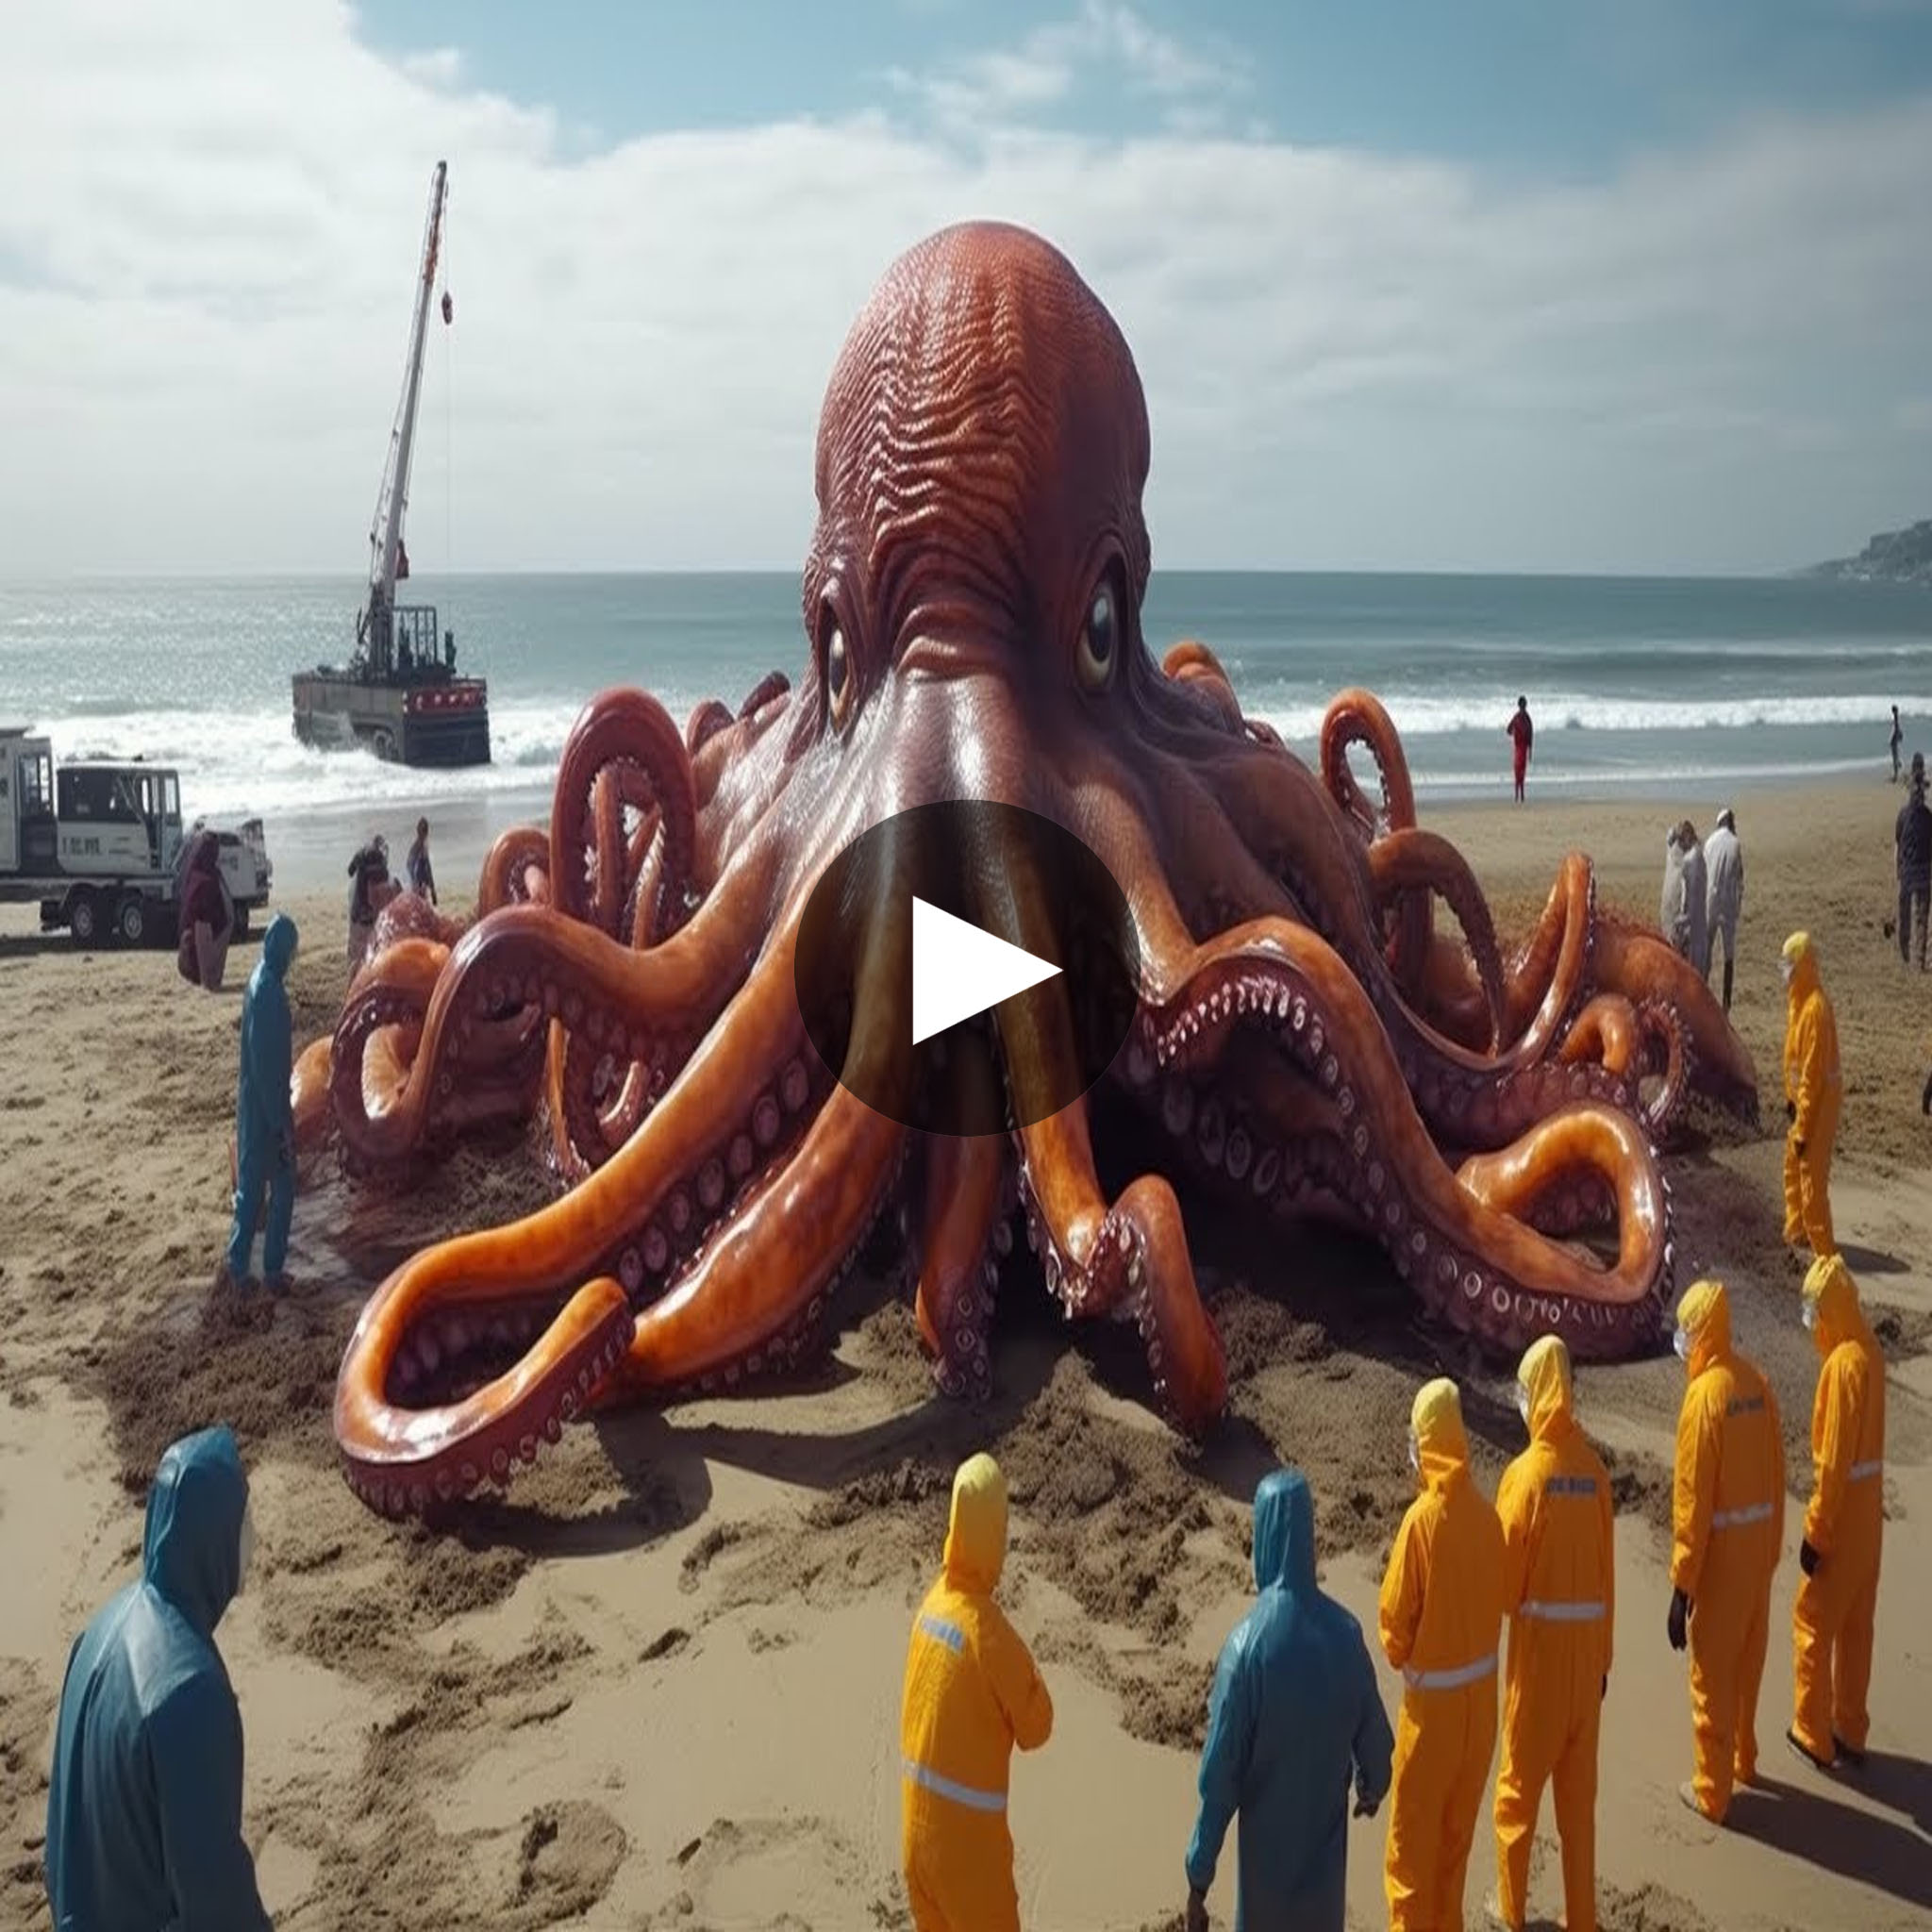 "Scientific Amazement Massive 26FootLong, 9000Pound Giant Squid